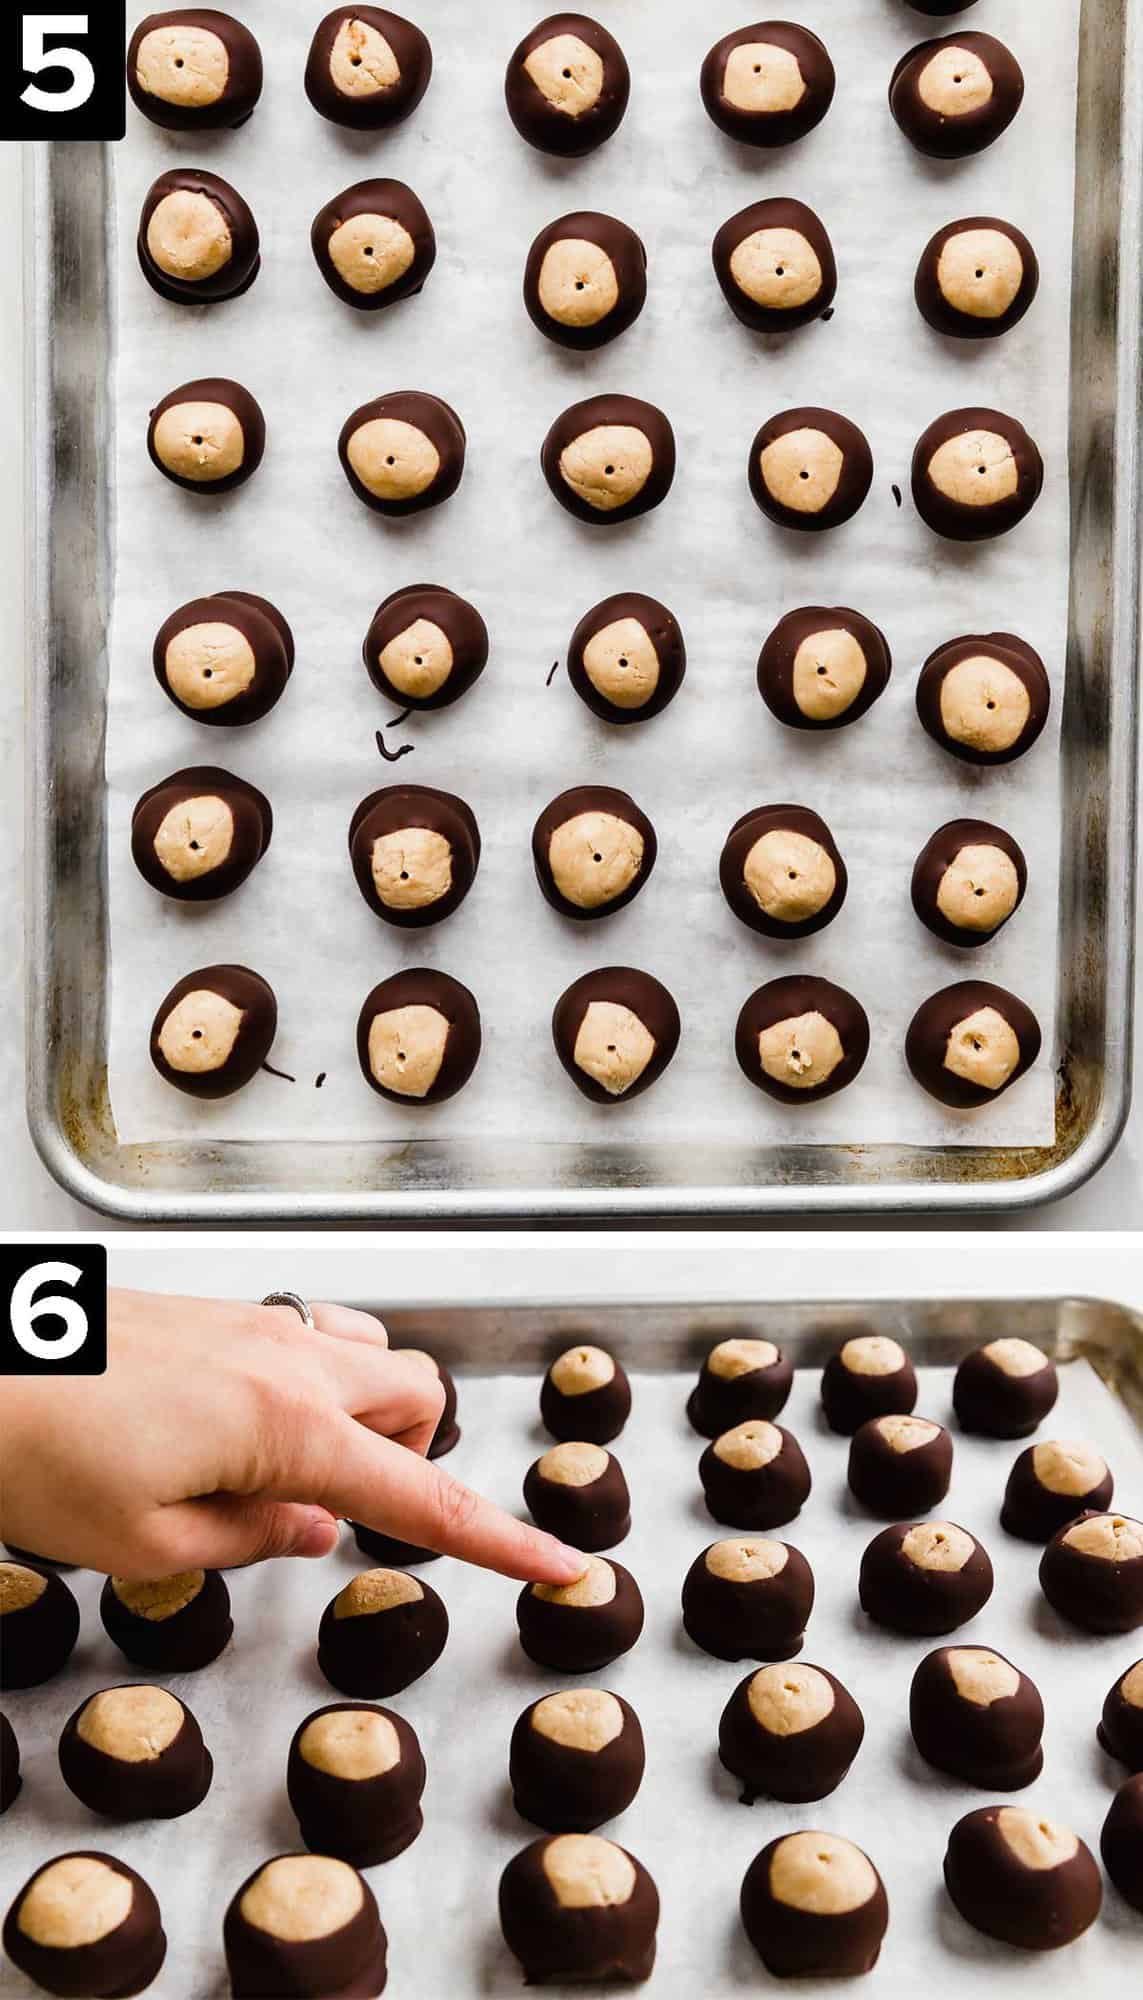 Chocolate dipped Buckeye balls on a baking sheet.